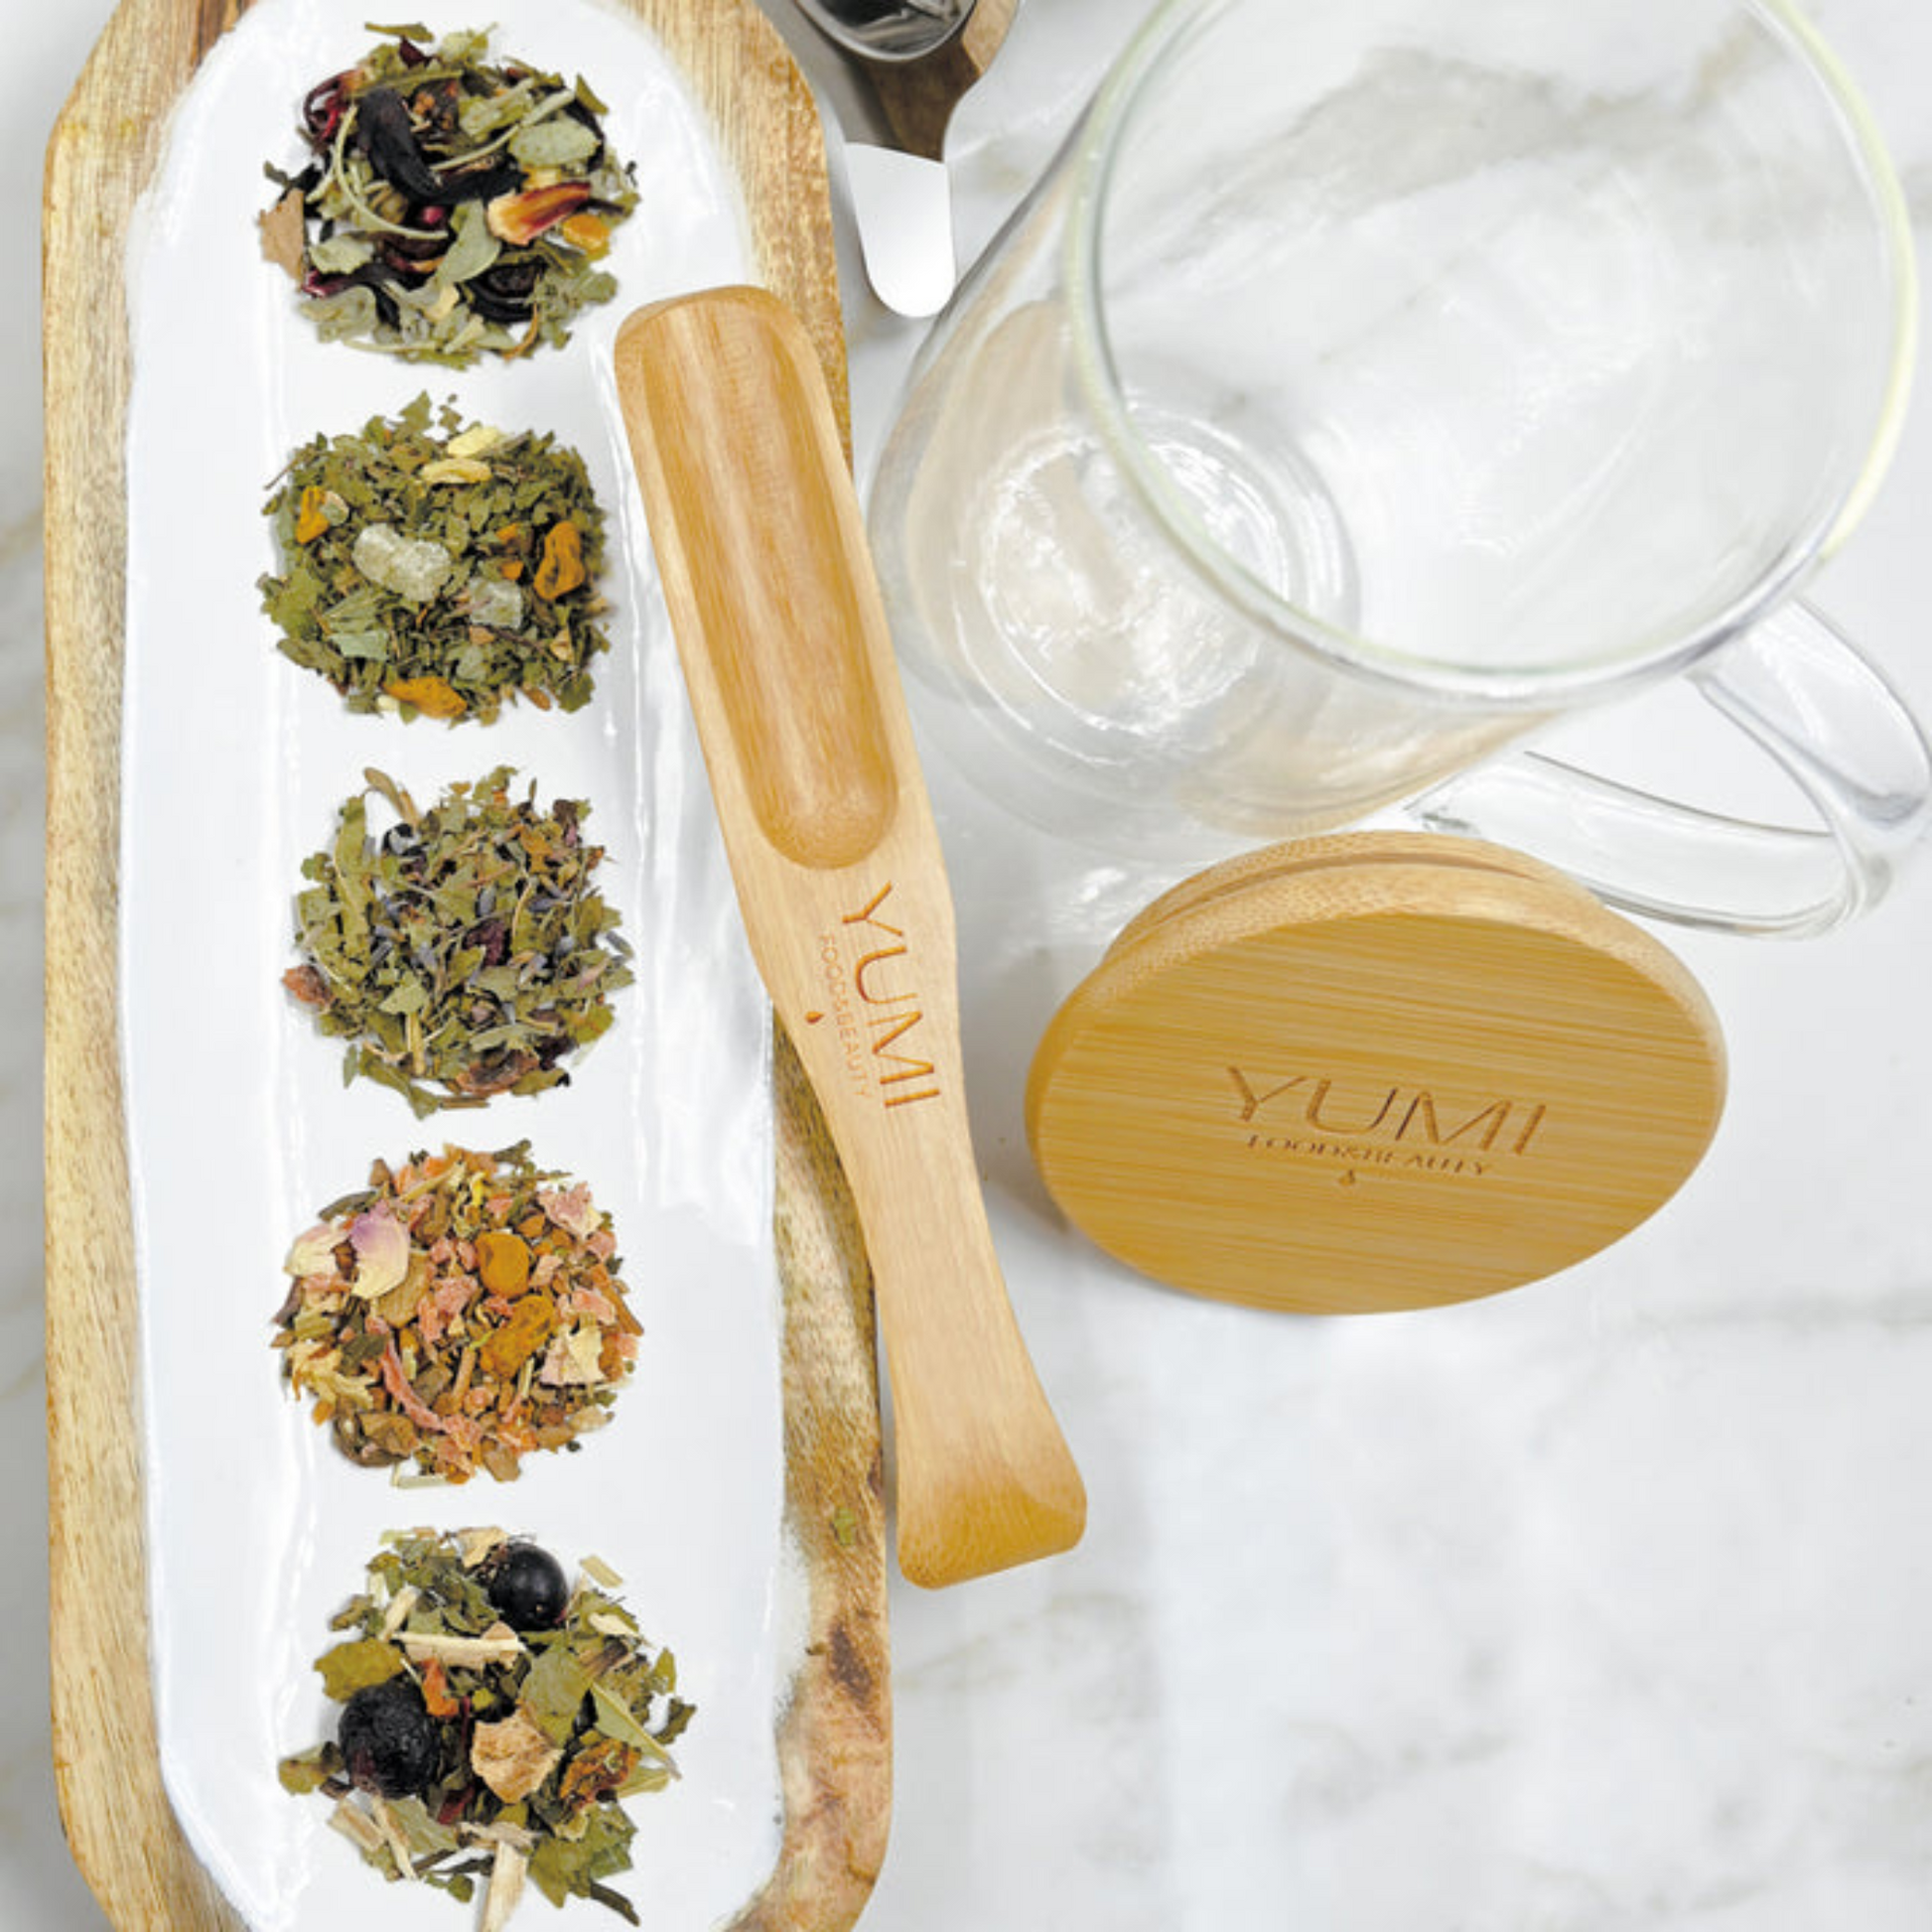 Yumi Food & Beauty Slimming Draining Green Tea 60gr